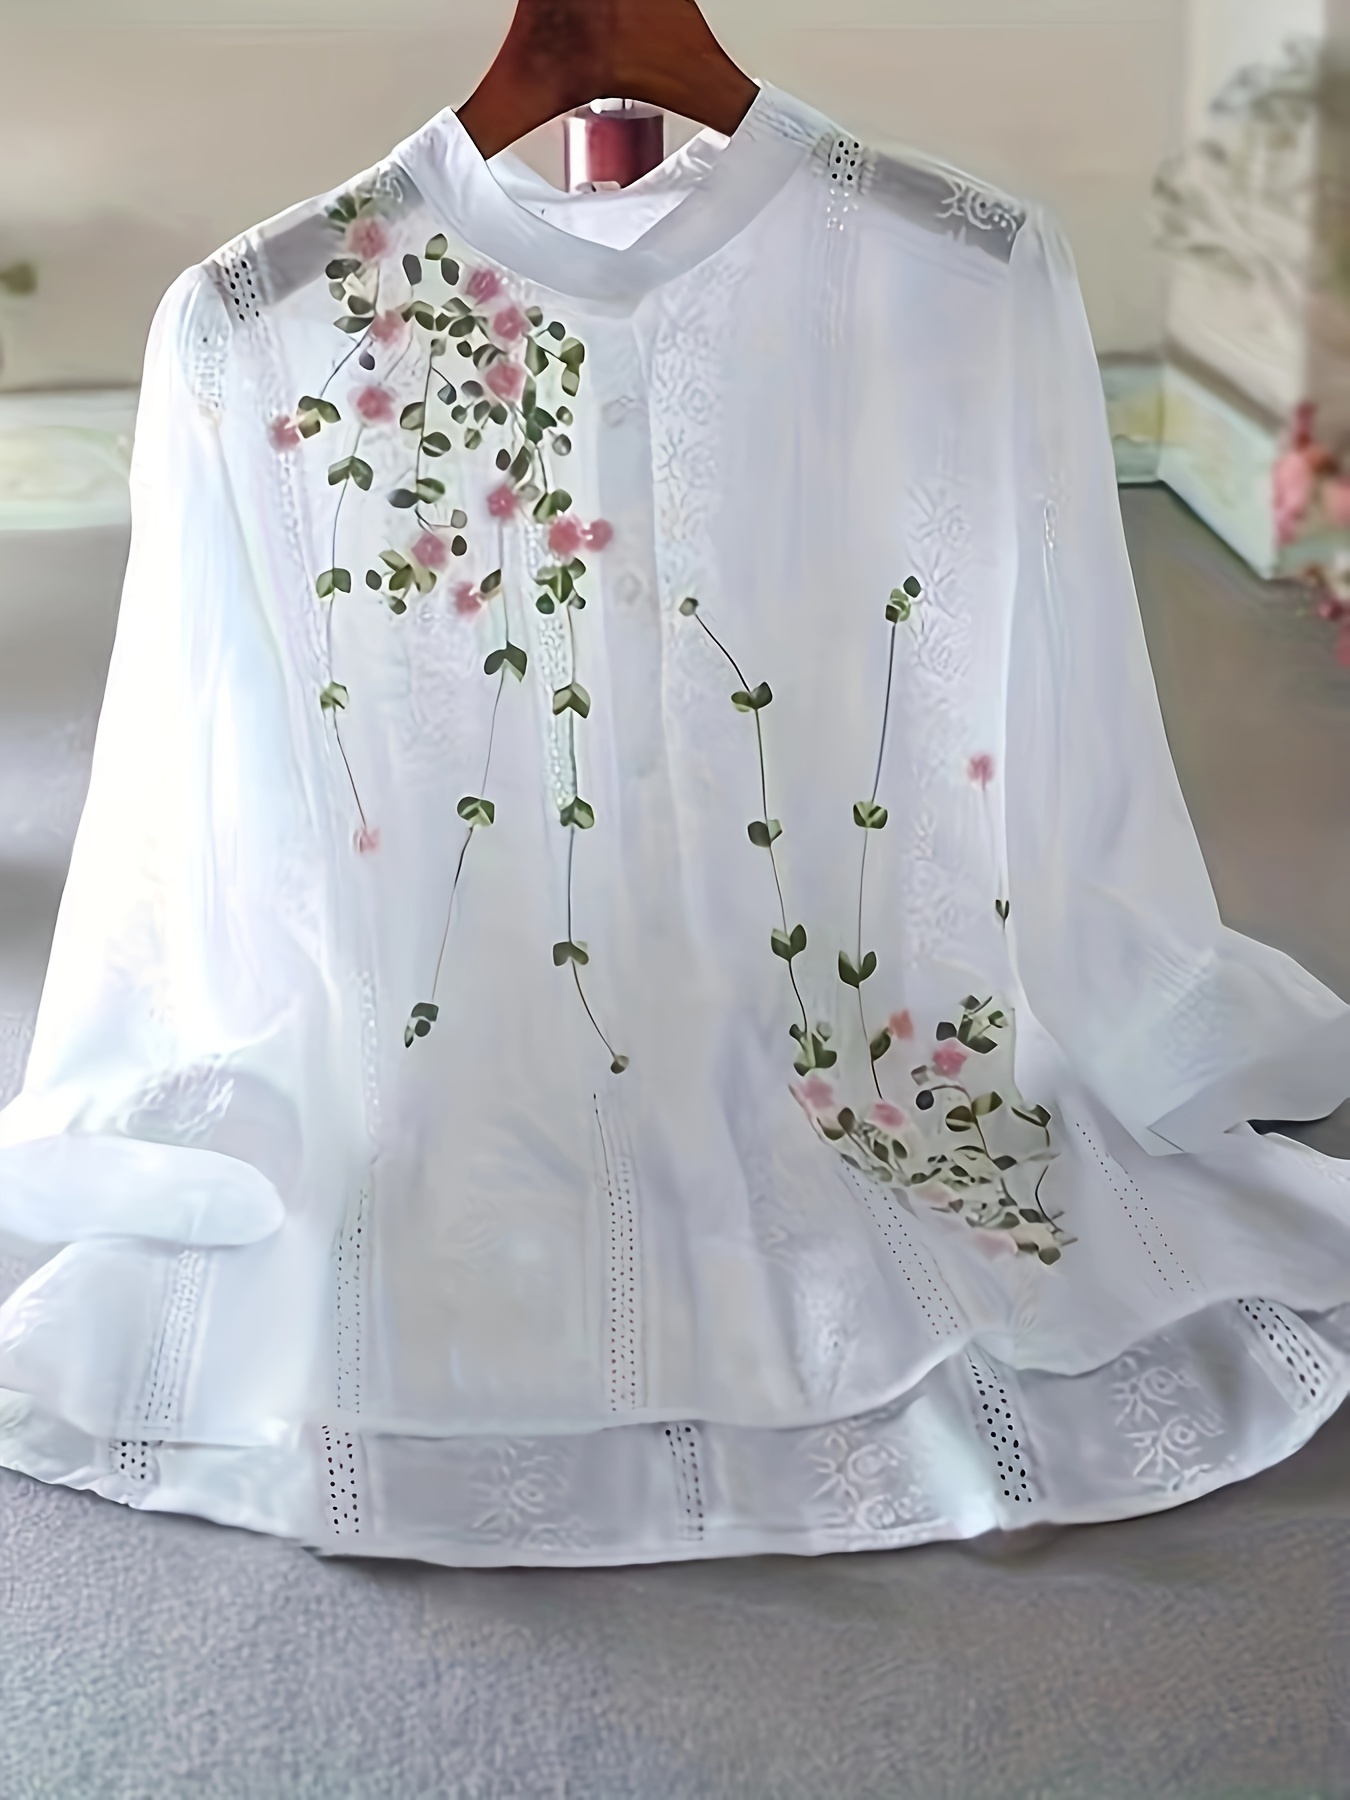 eyelet floral blouse elegant button front blouse for spring summer womens clothing details 6